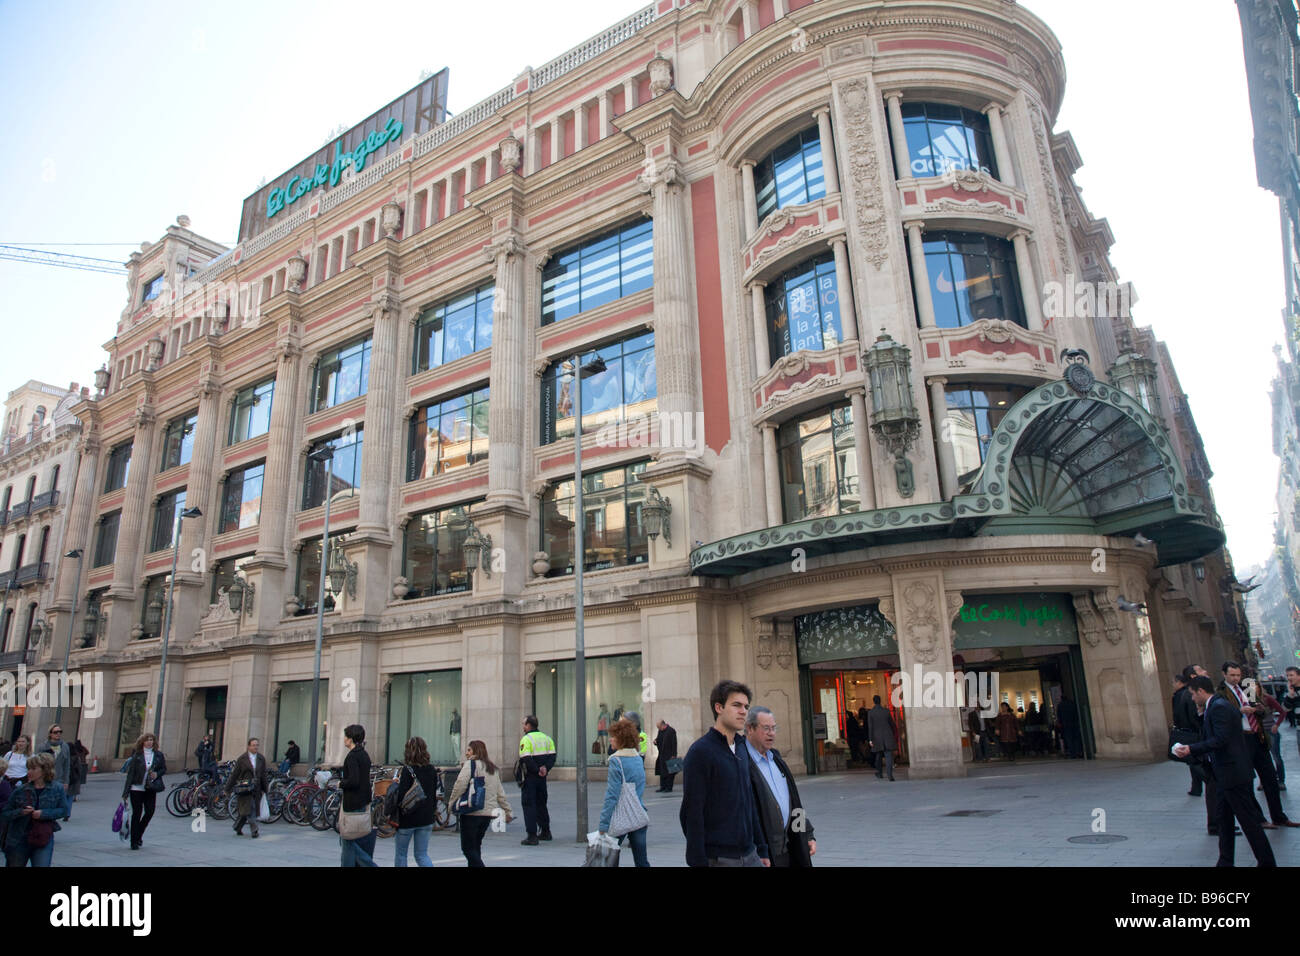 El Corte Ingles store shop Barcelona Catalonia Spain Stock Photo - Alamy